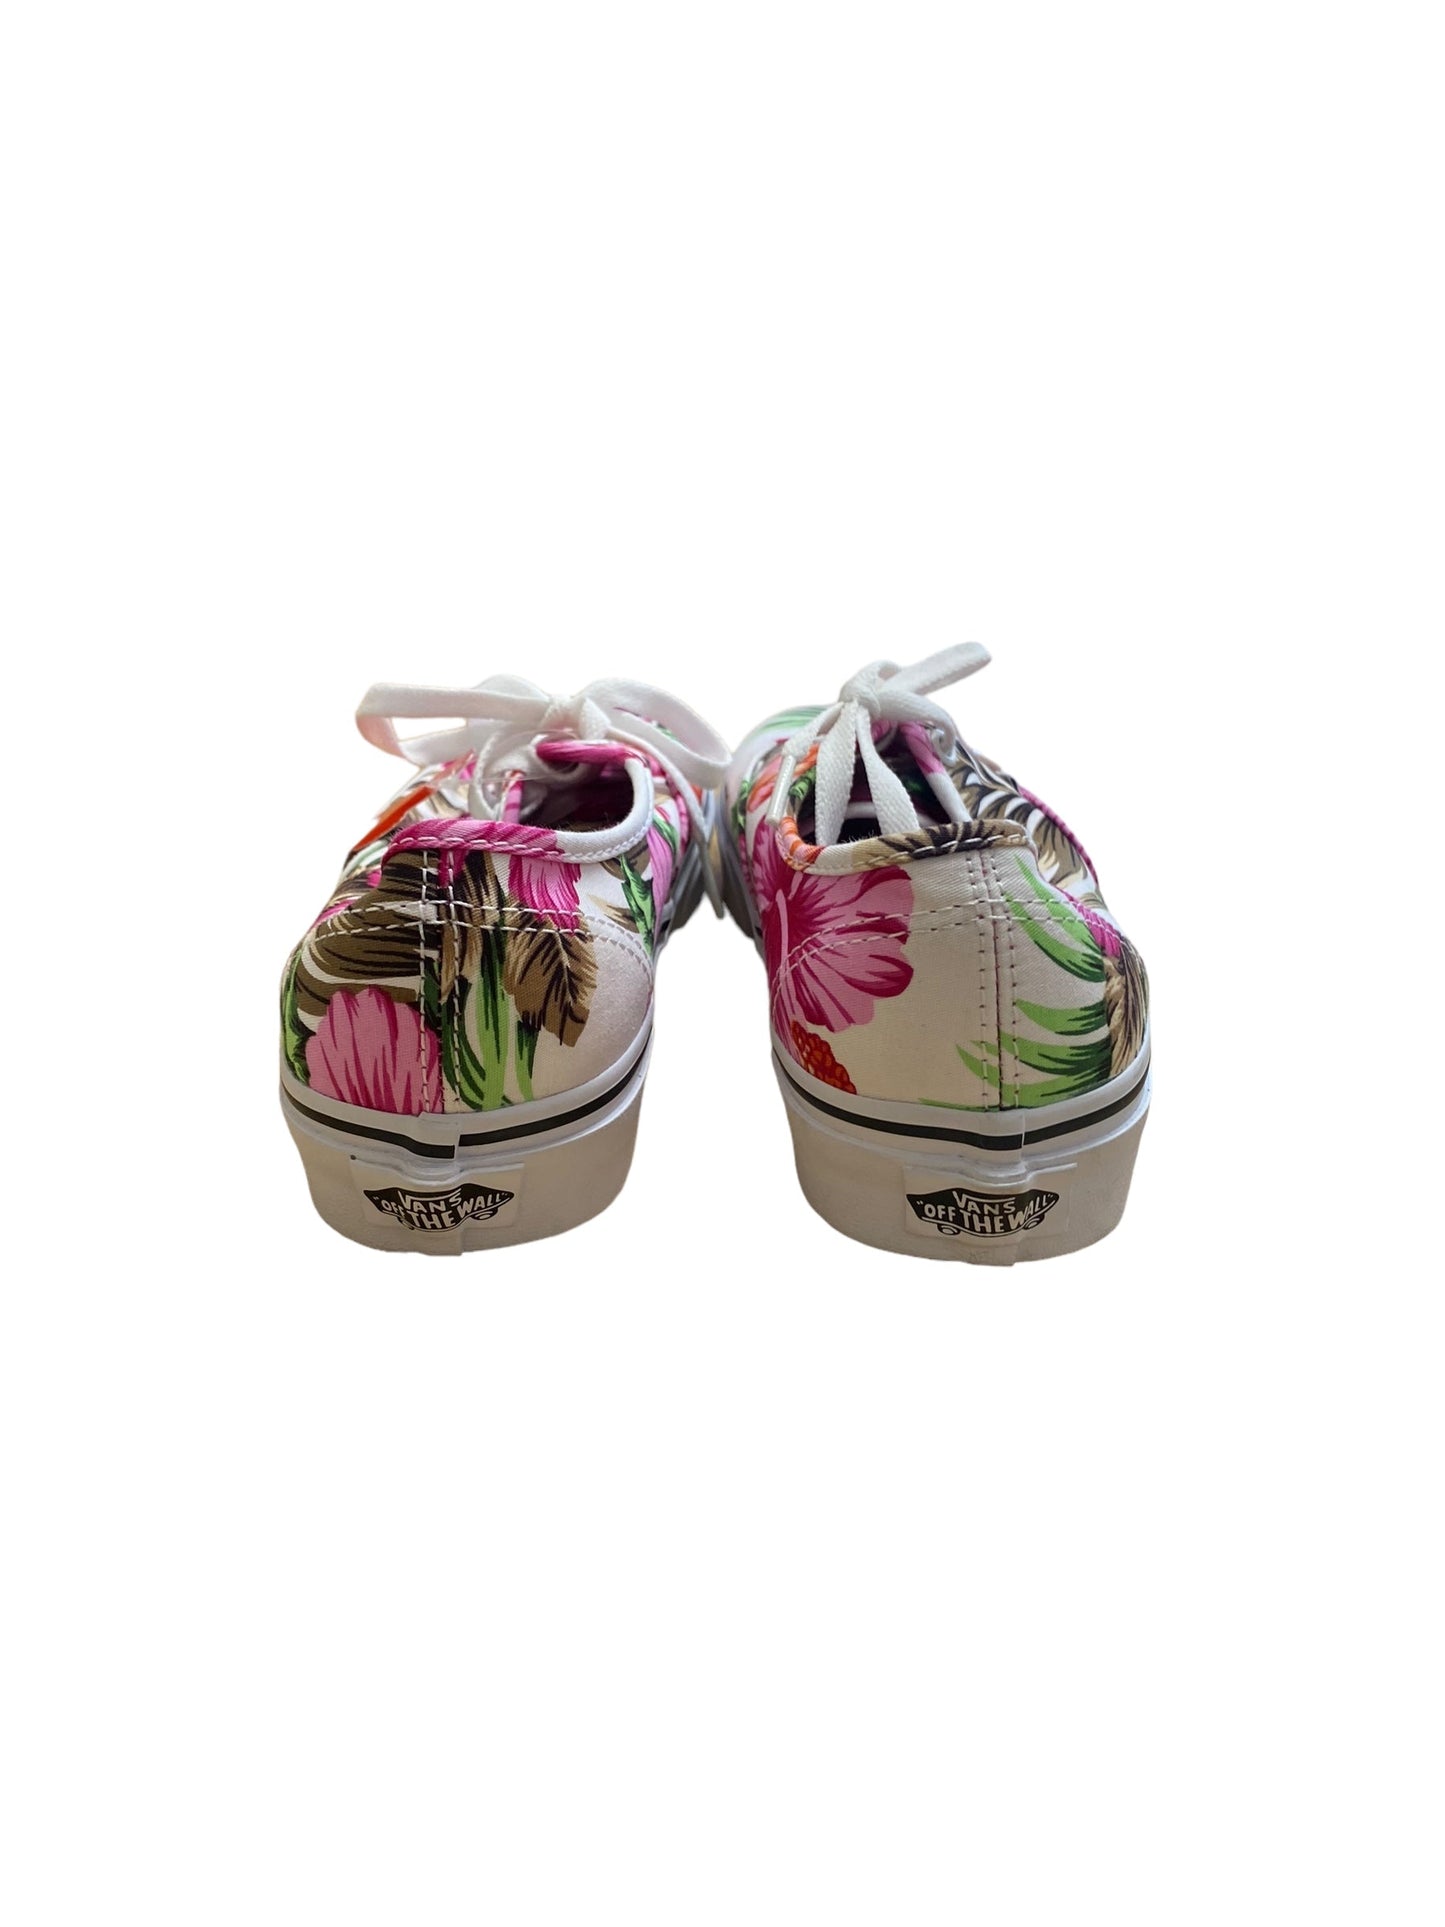 Floral Print Shoes Sneakers Vans, Size 7